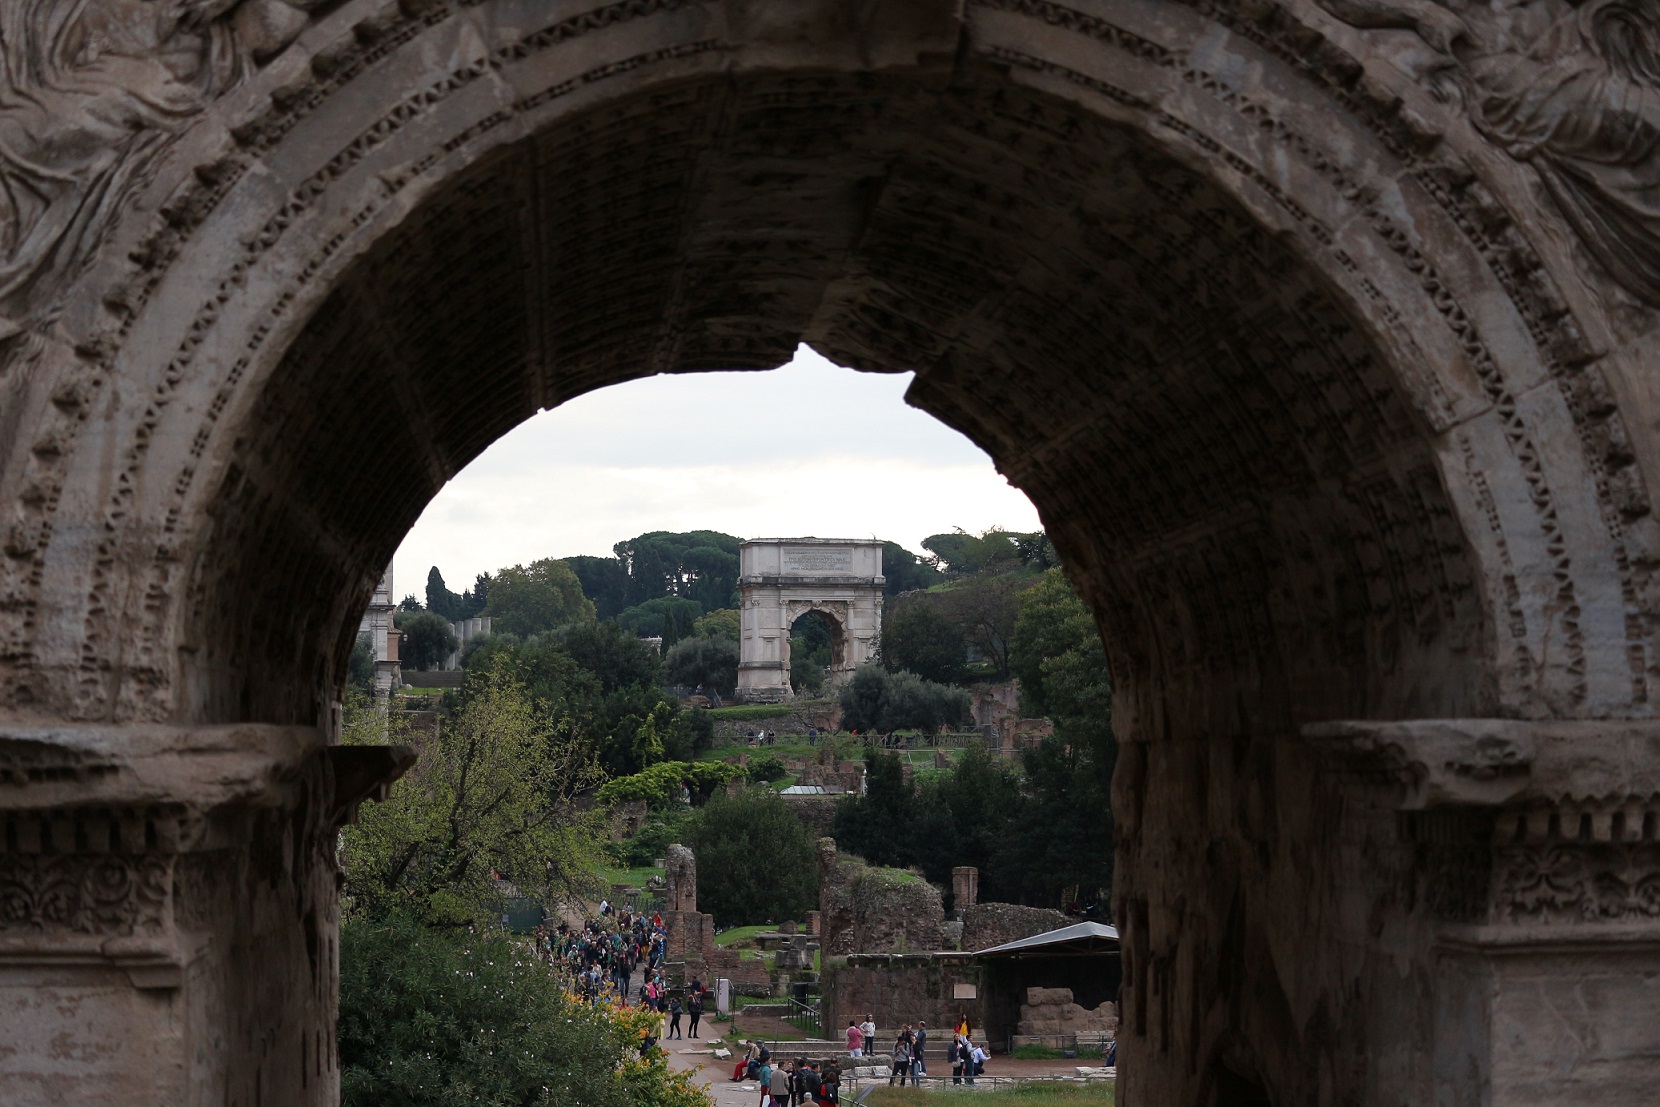 Arches in Rome